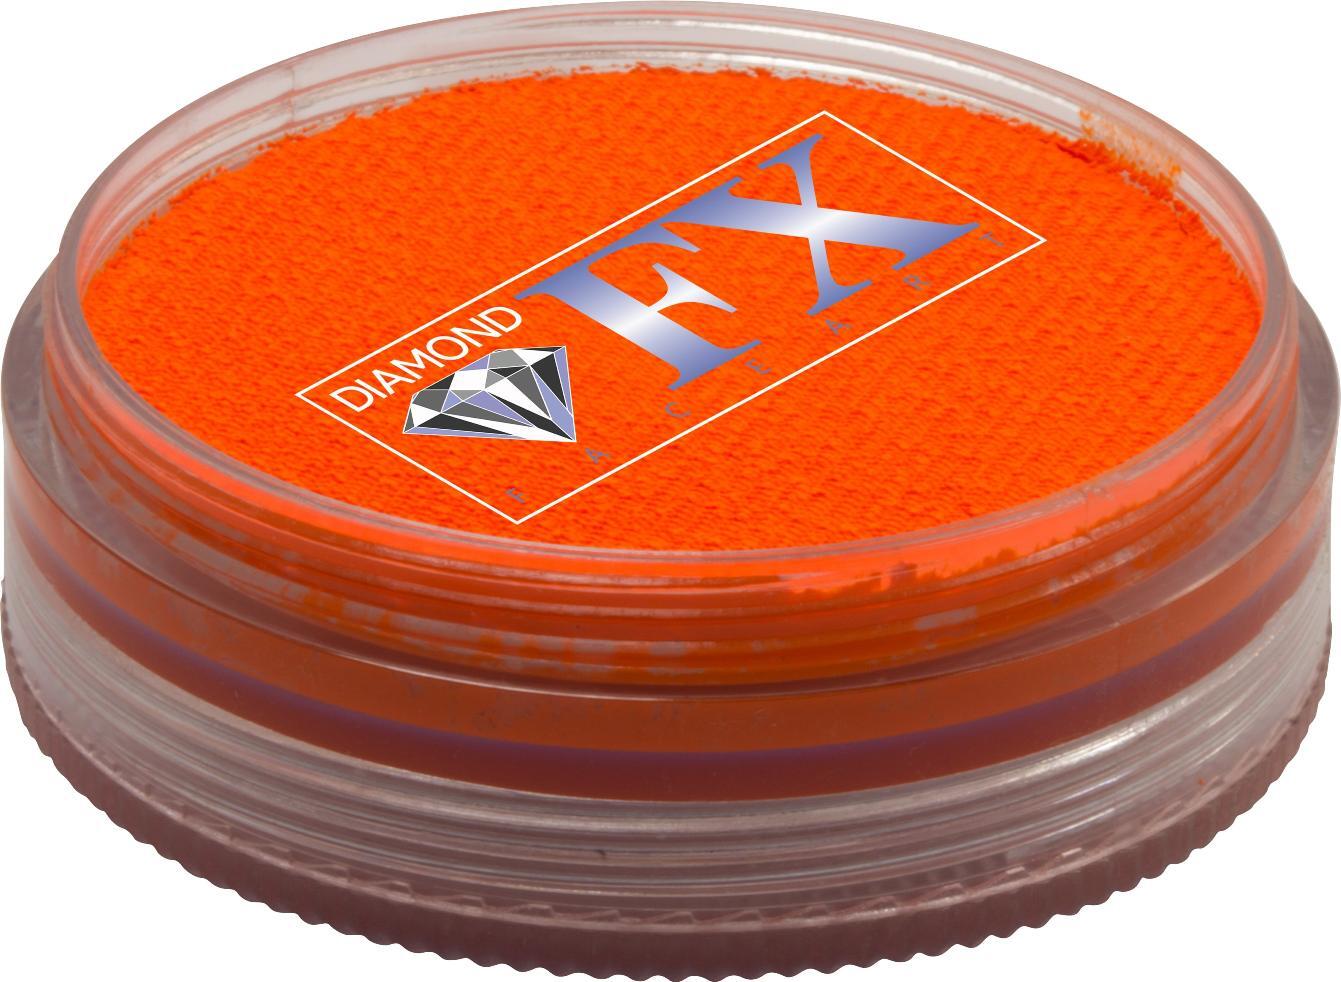 Diamond FX Orange Neon 45g - Small Image